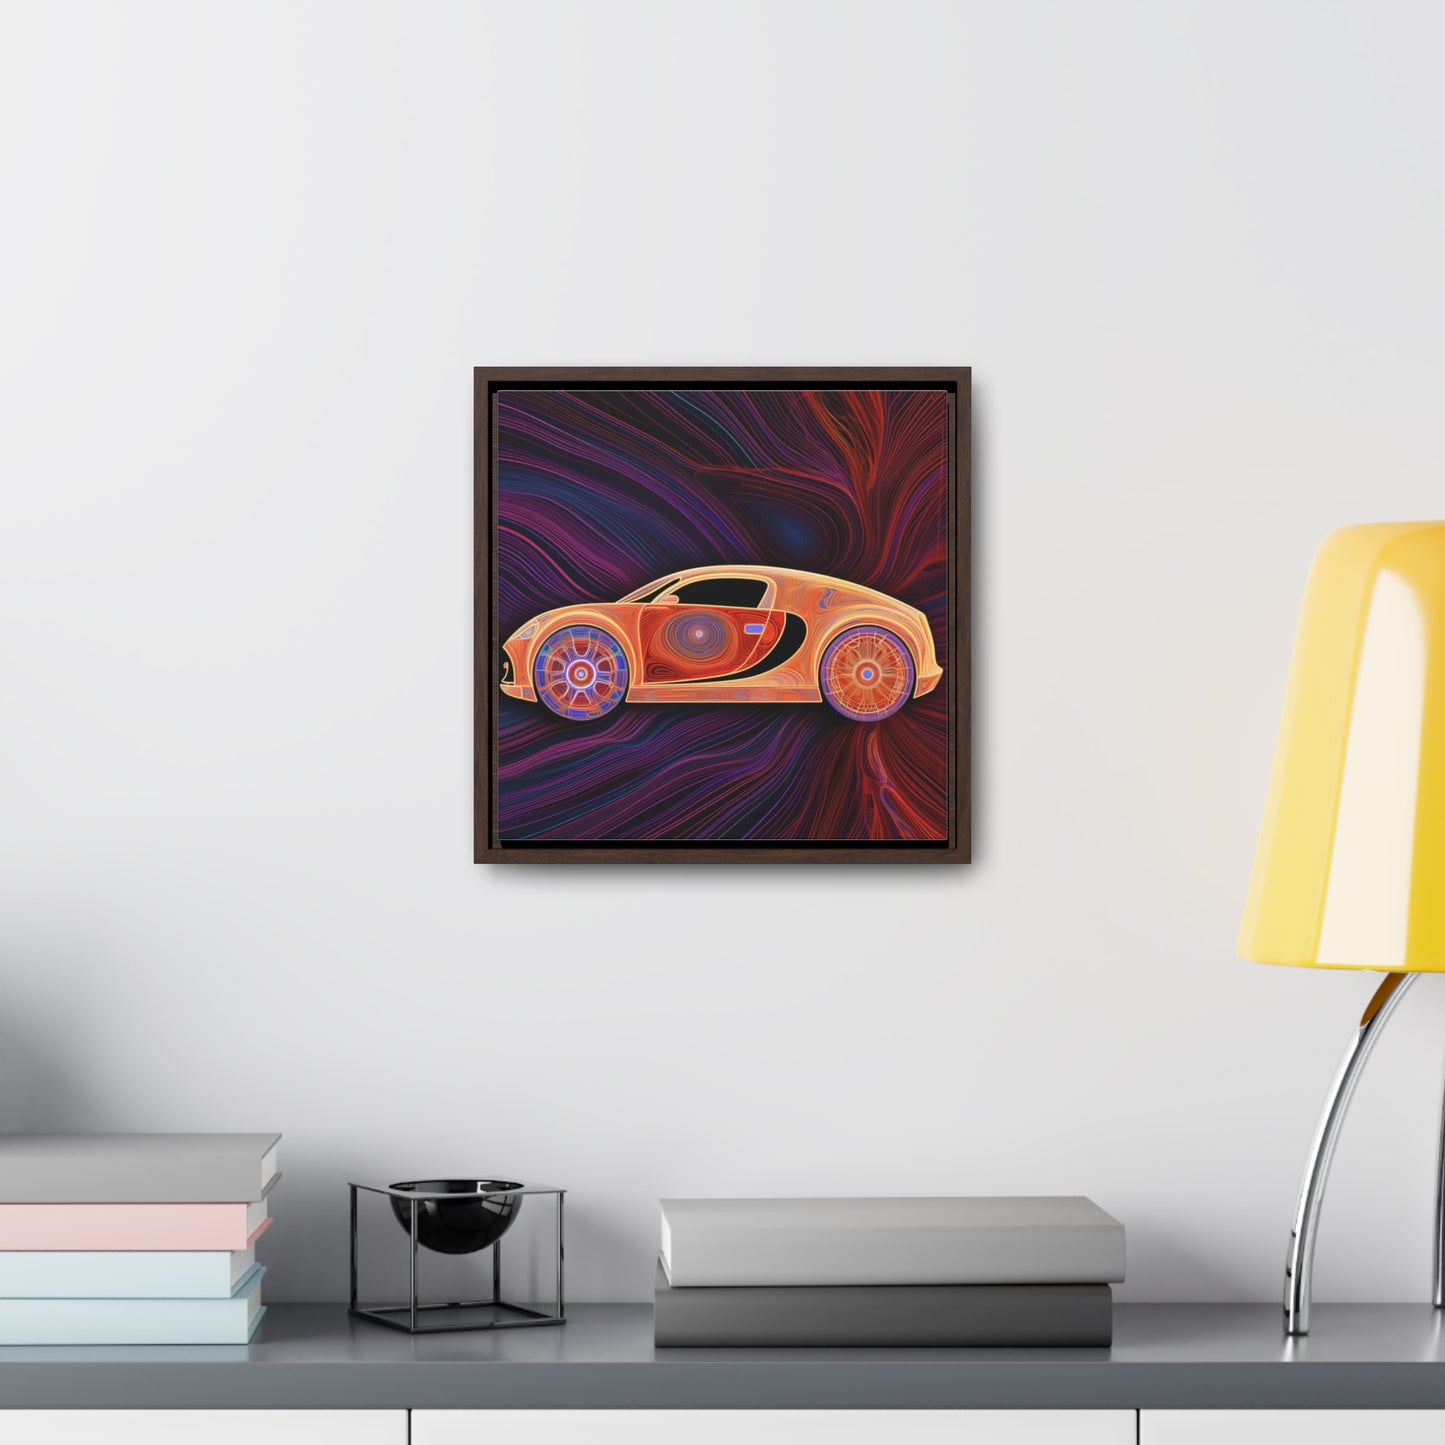 Gallery Canvas Wraps, Square Frame Bugatti Abstract Concept 2